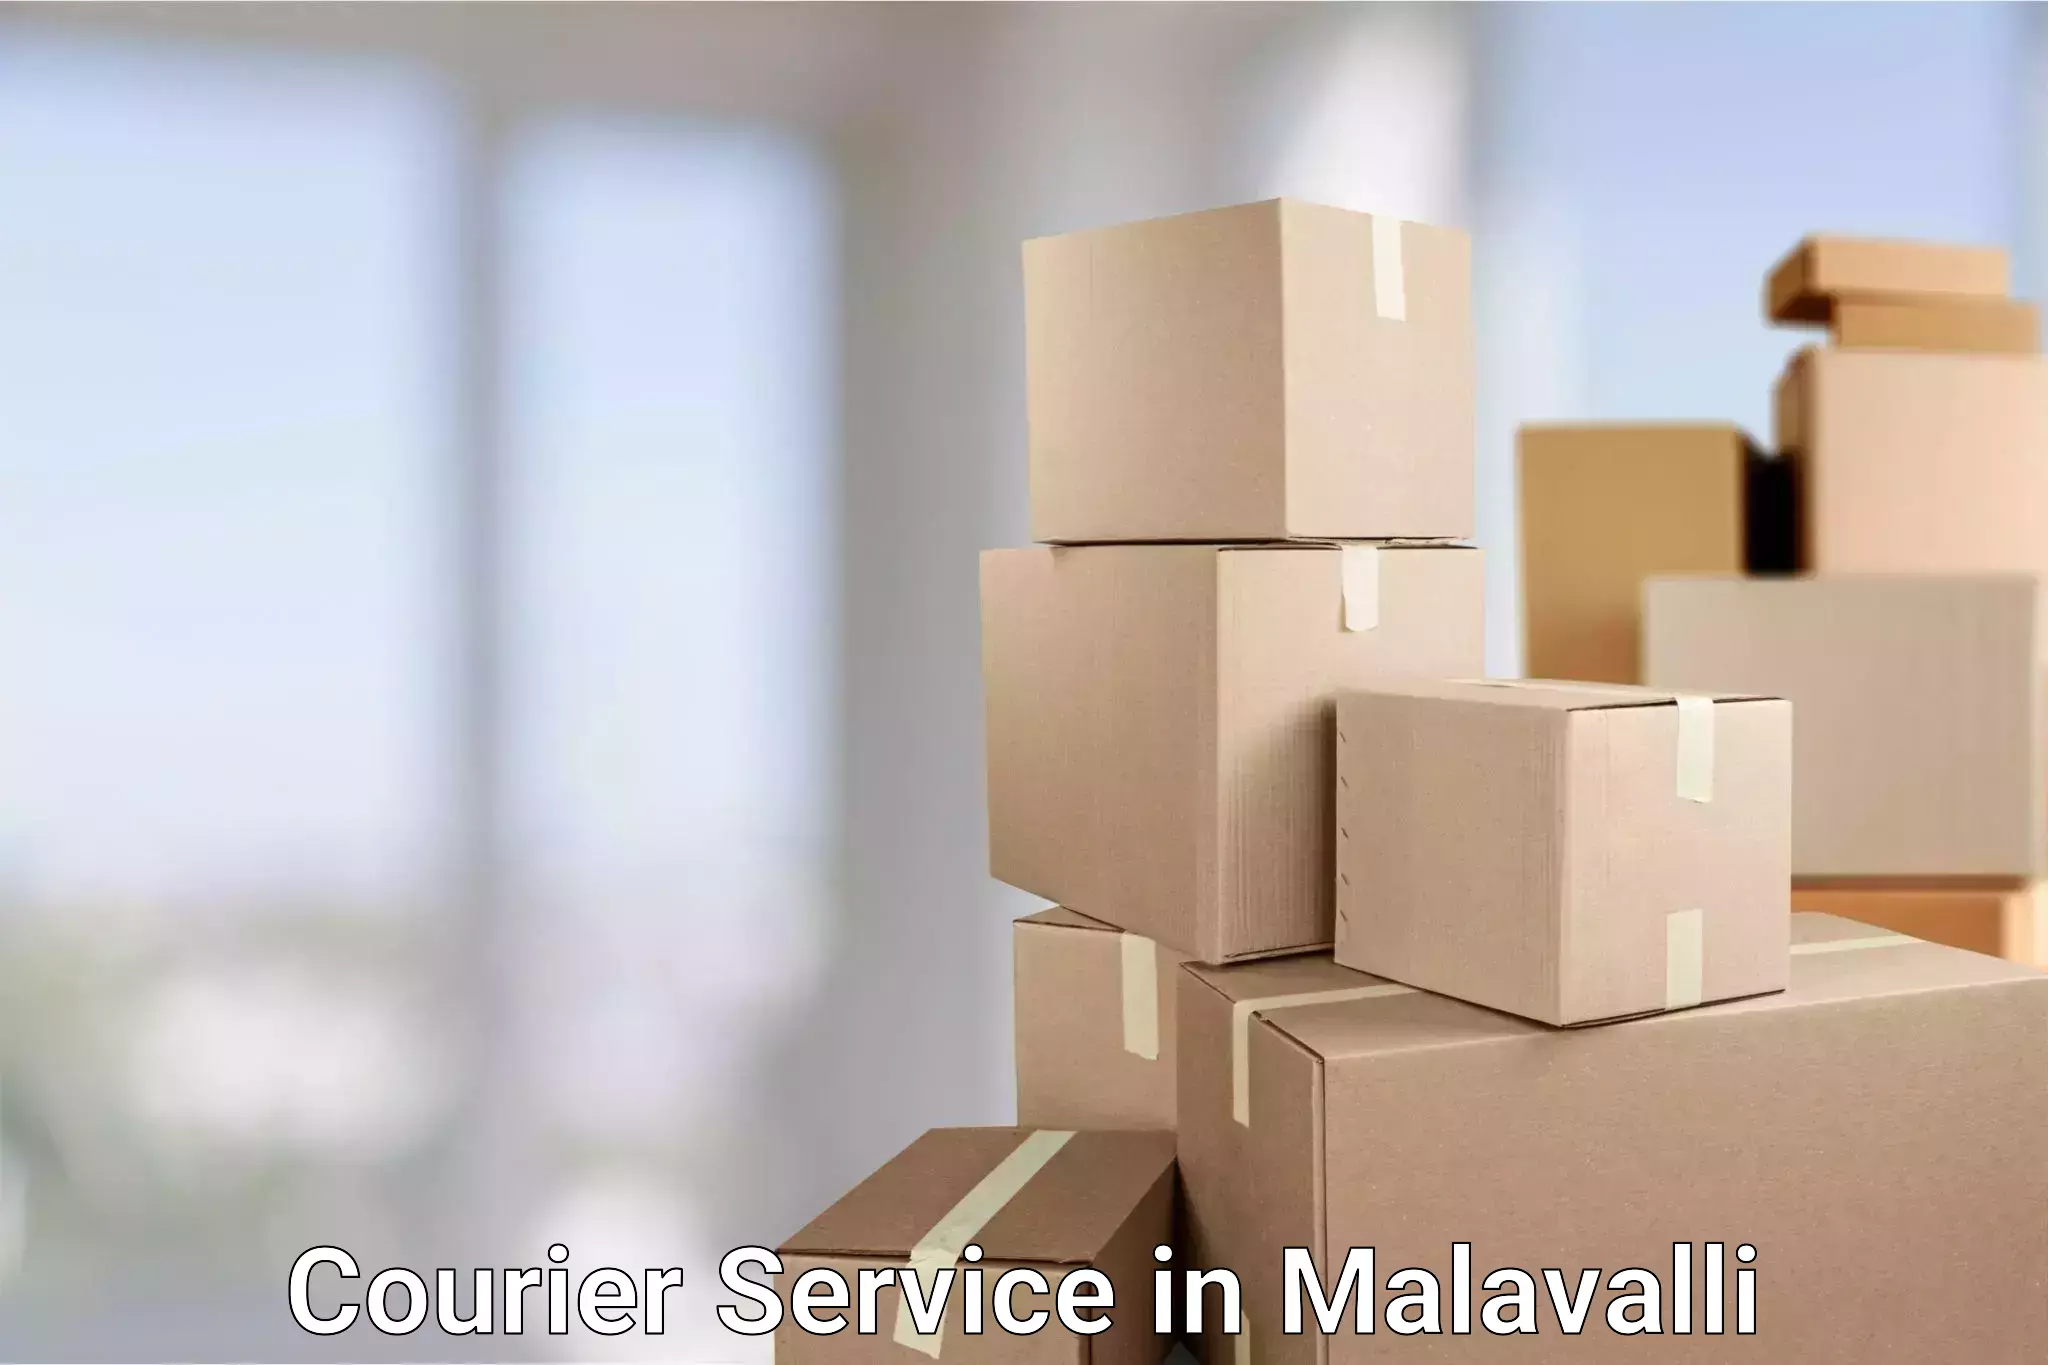 Express package handling in Malavalli